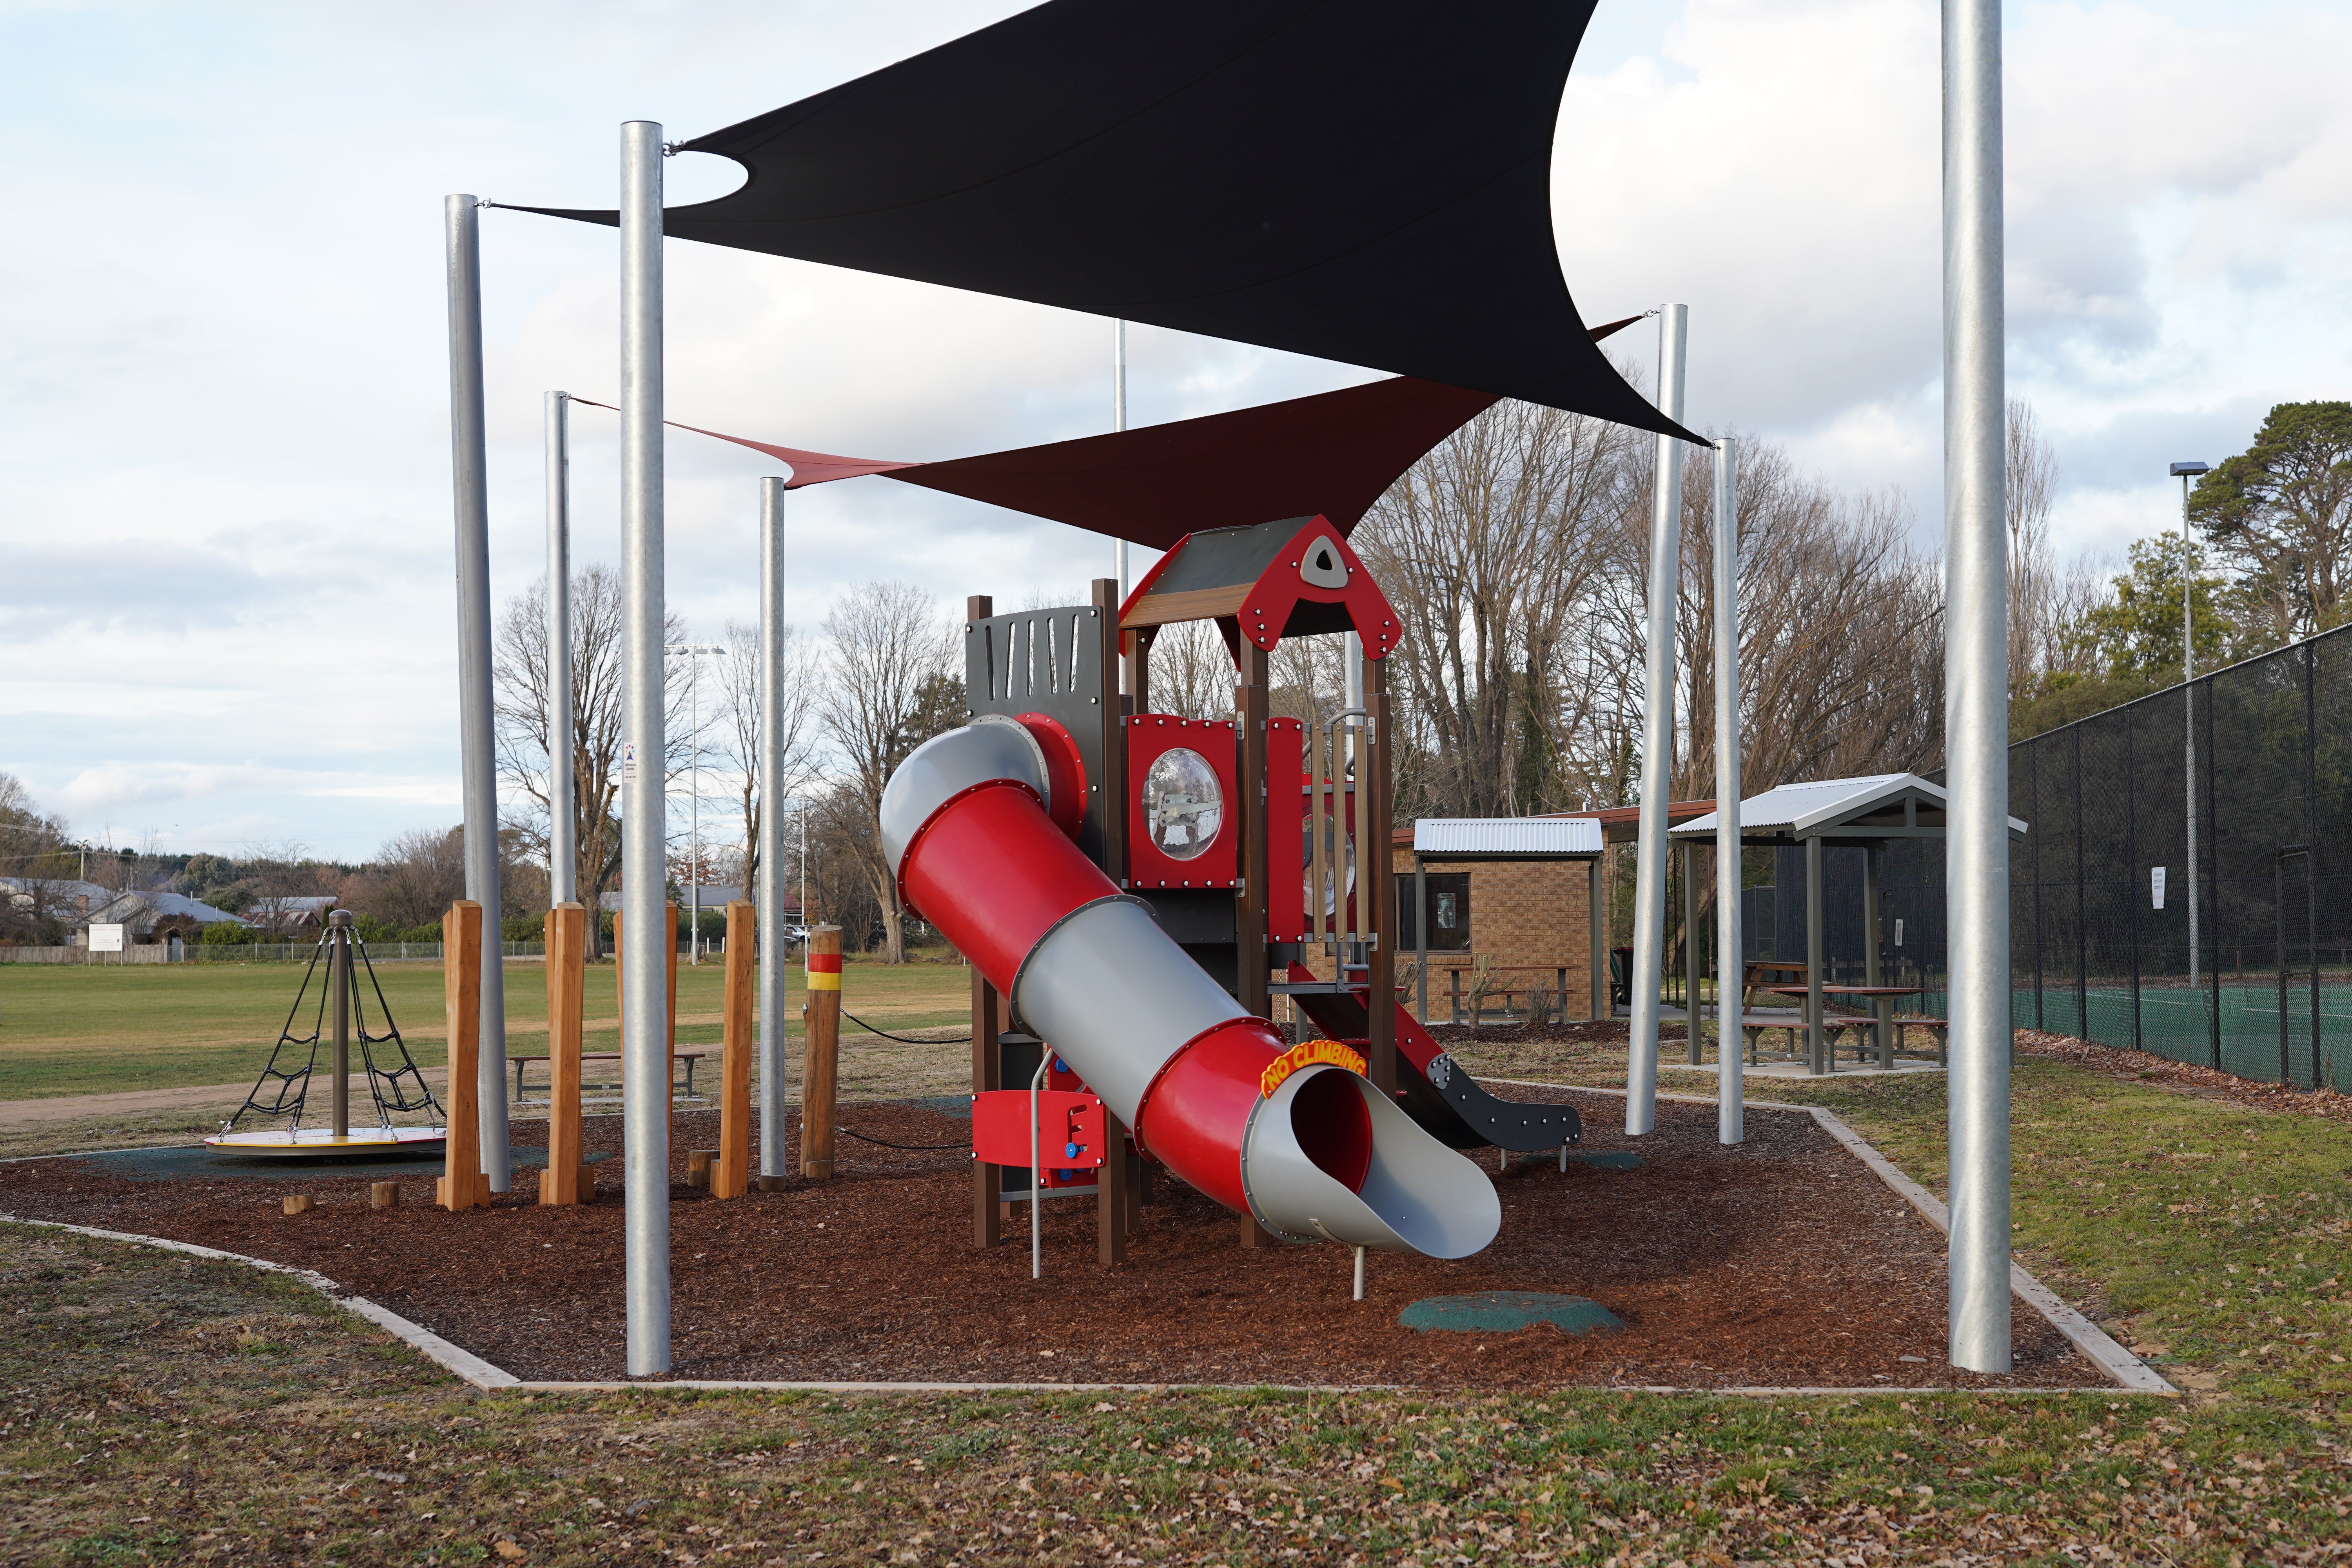 Braidwood Recreation Grounds and Playground - Lennox Head Accommodation